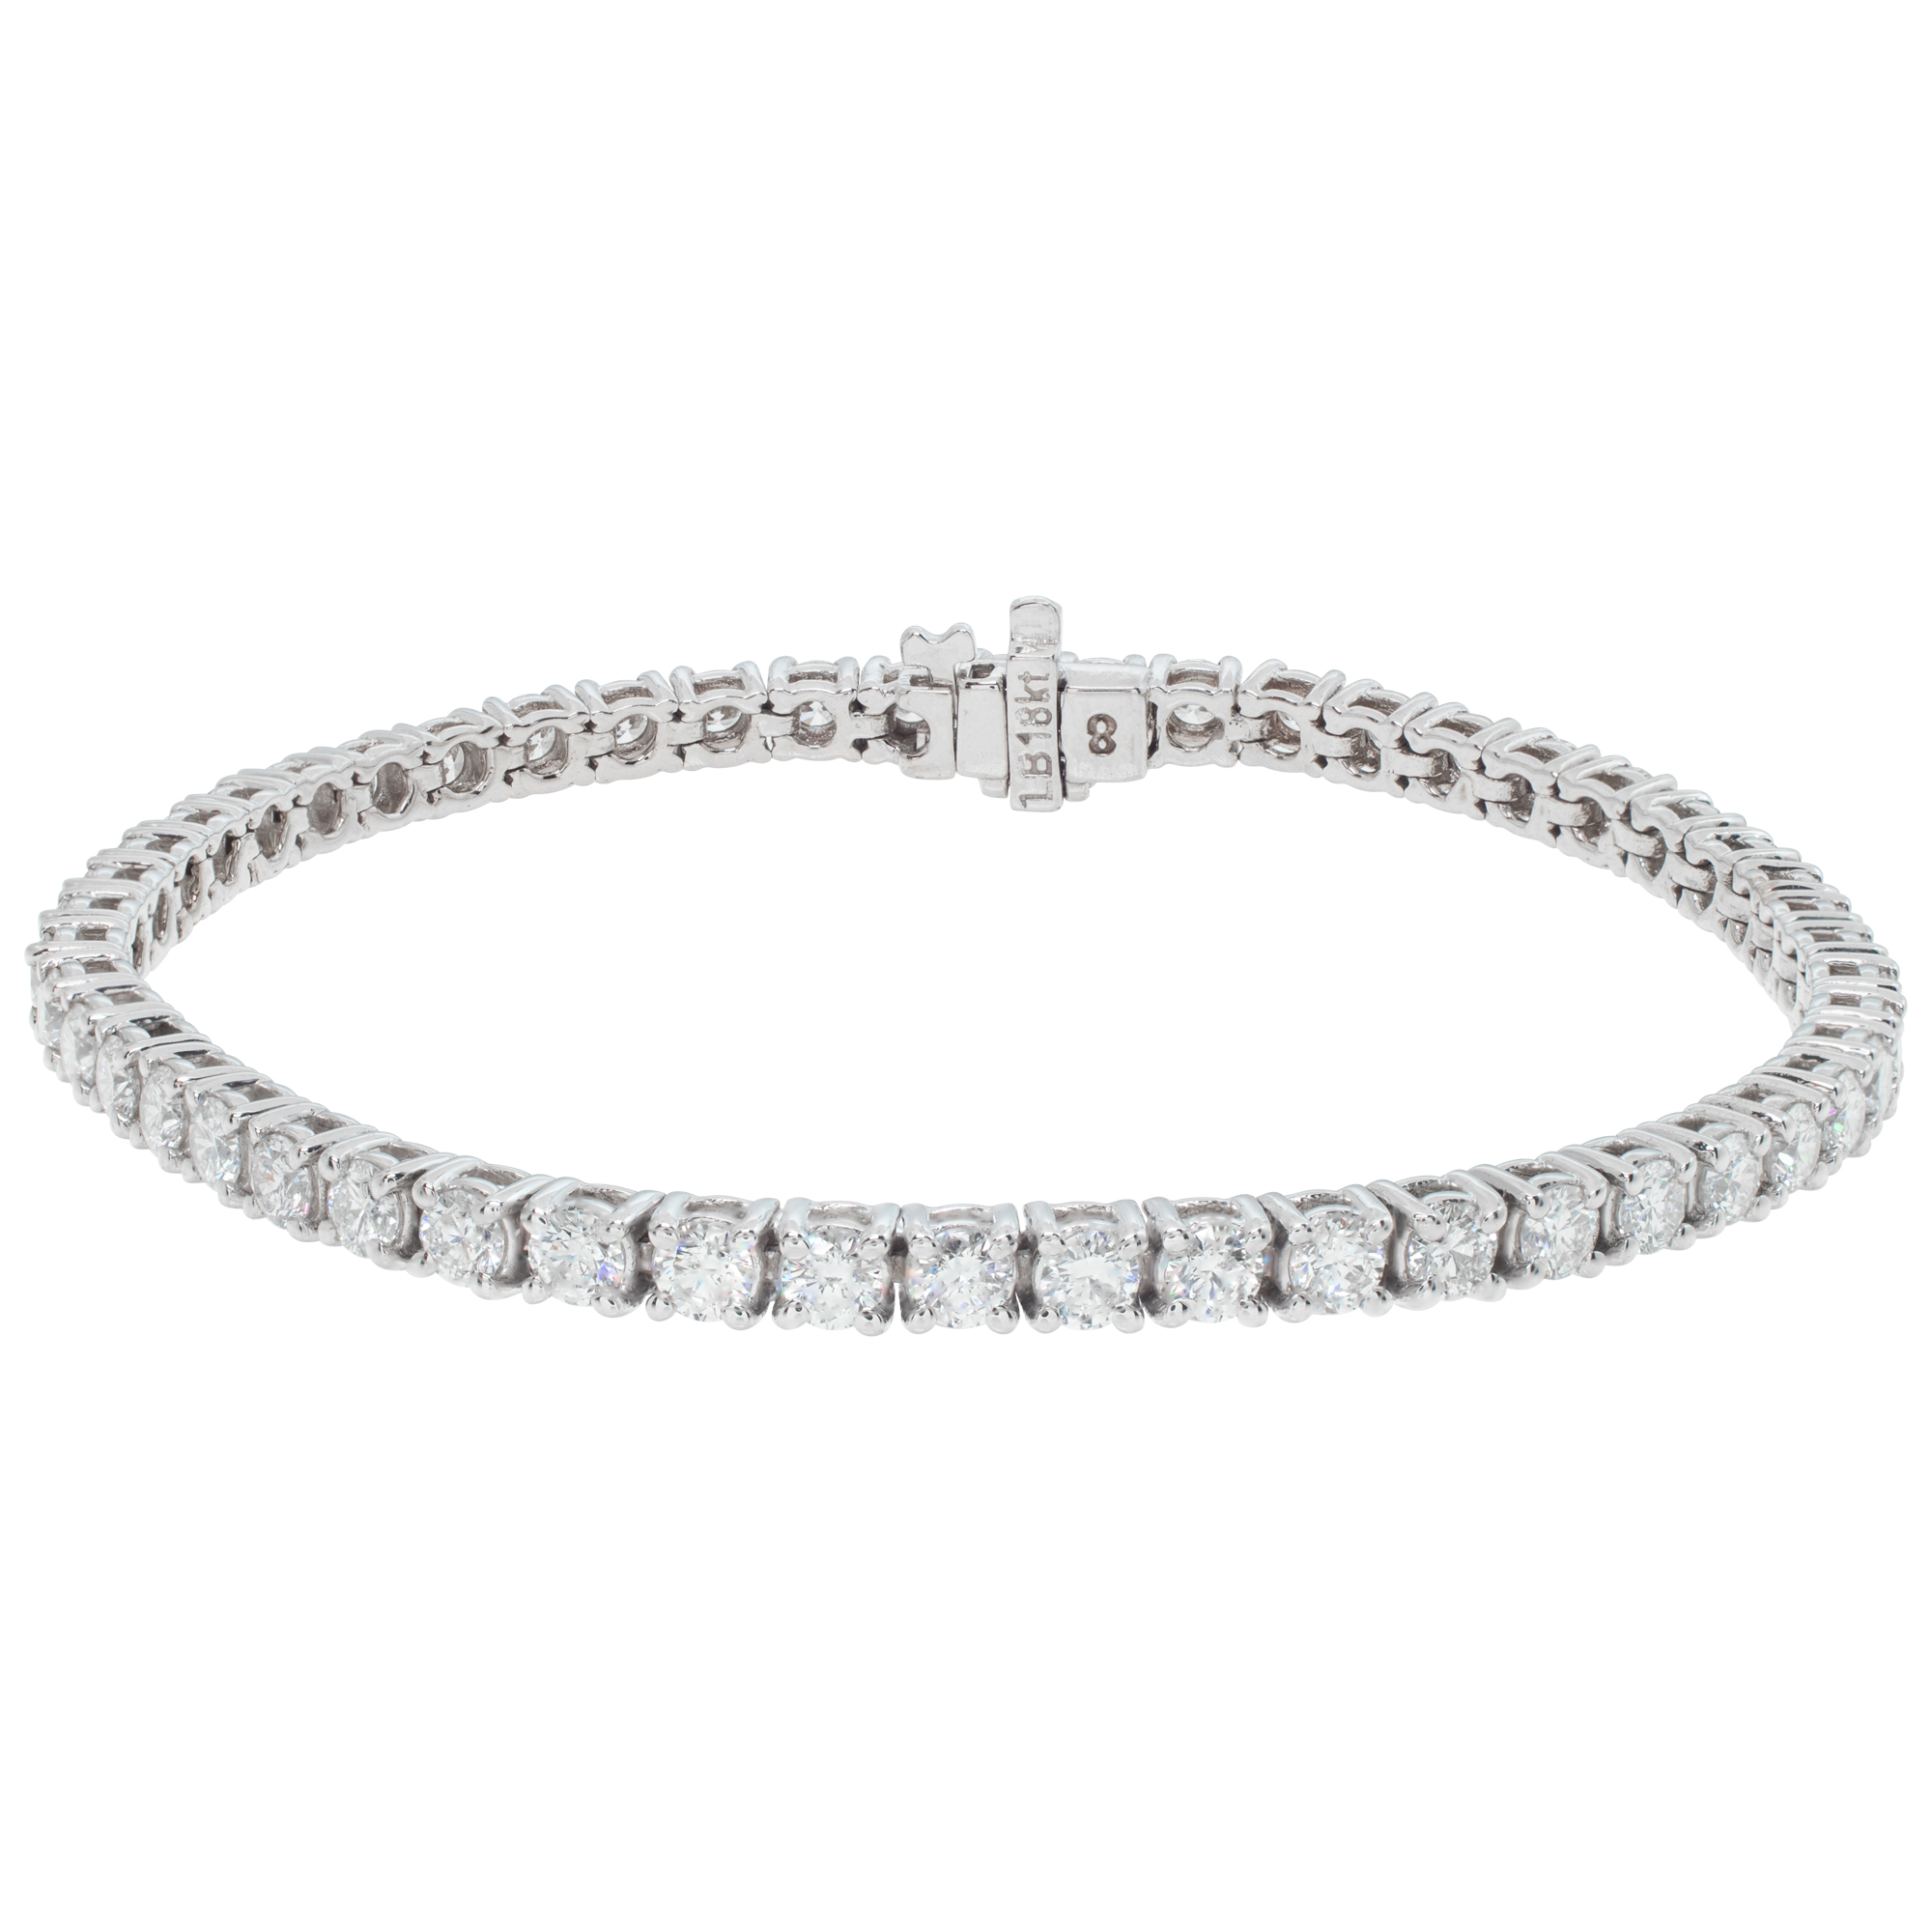 18k white gold diamond tennis bracelet with 4.95 carats in round diamonds